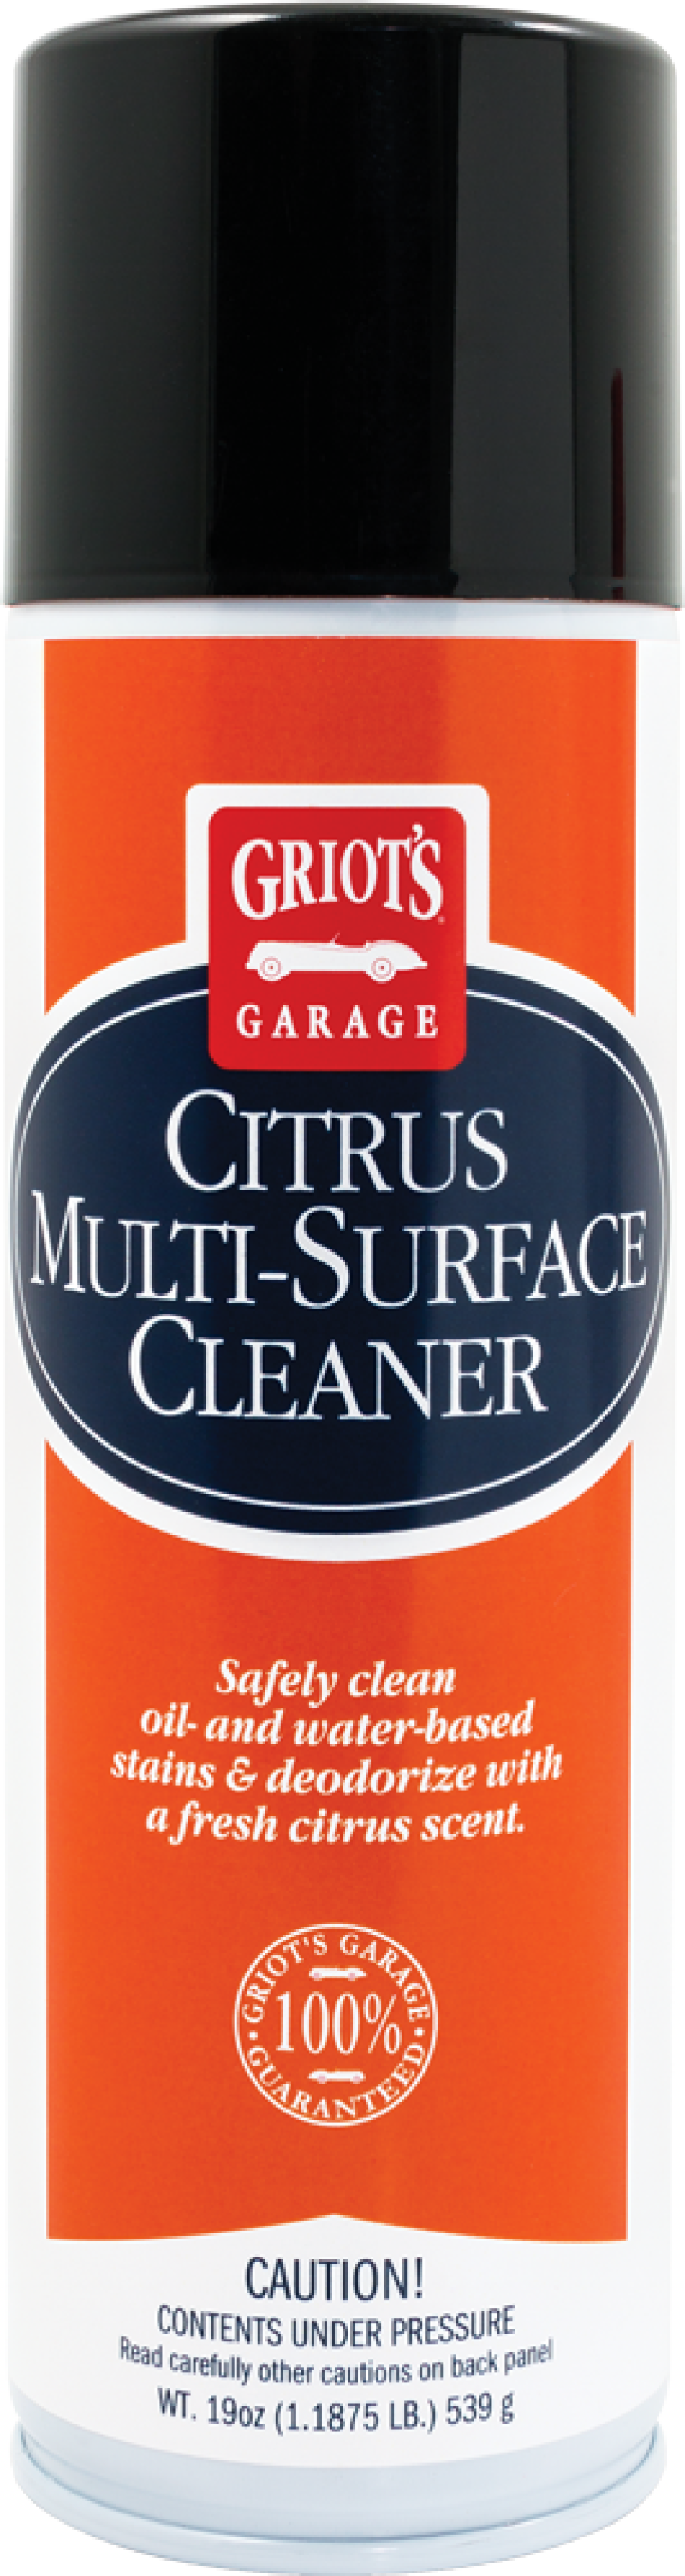 Griots Garage Citrus Multi-Surface Cleaner - 19oz 11367 Main Image